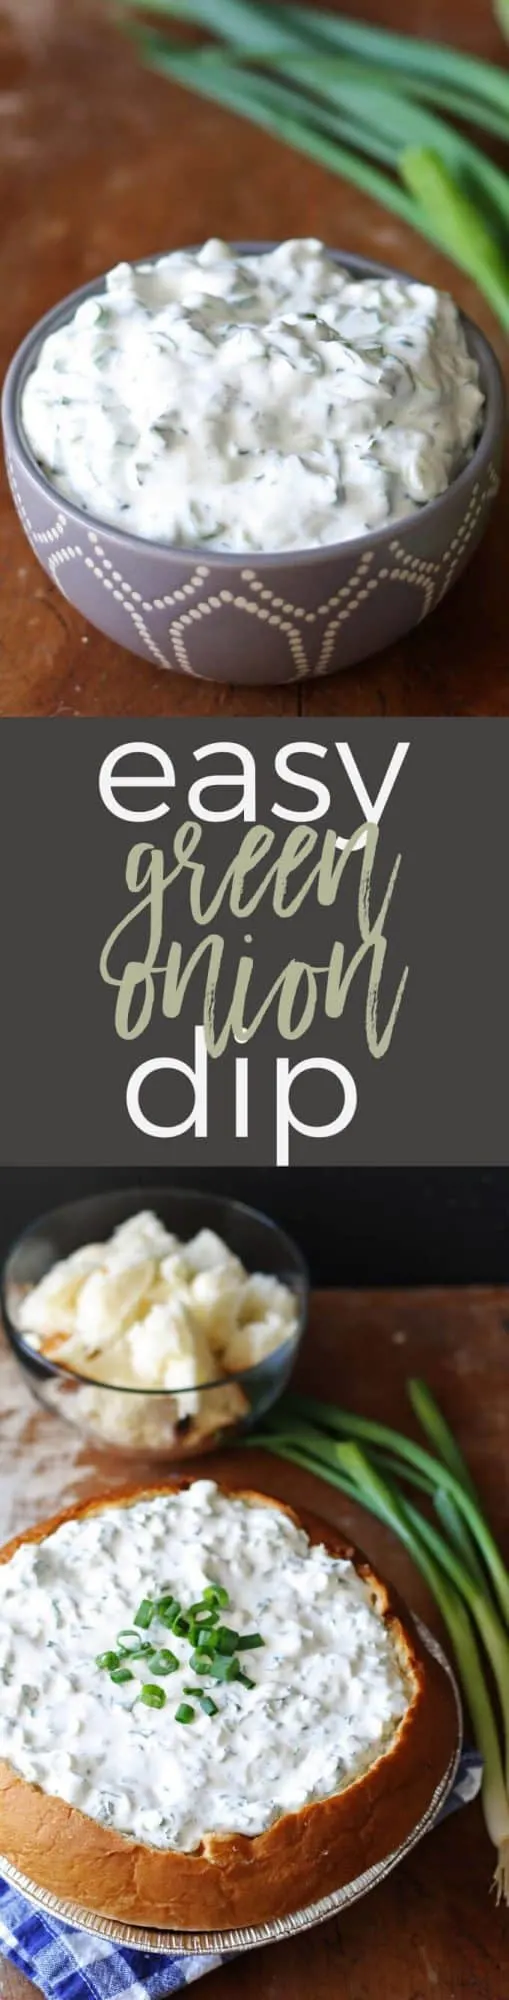 Easy green onion dip pin